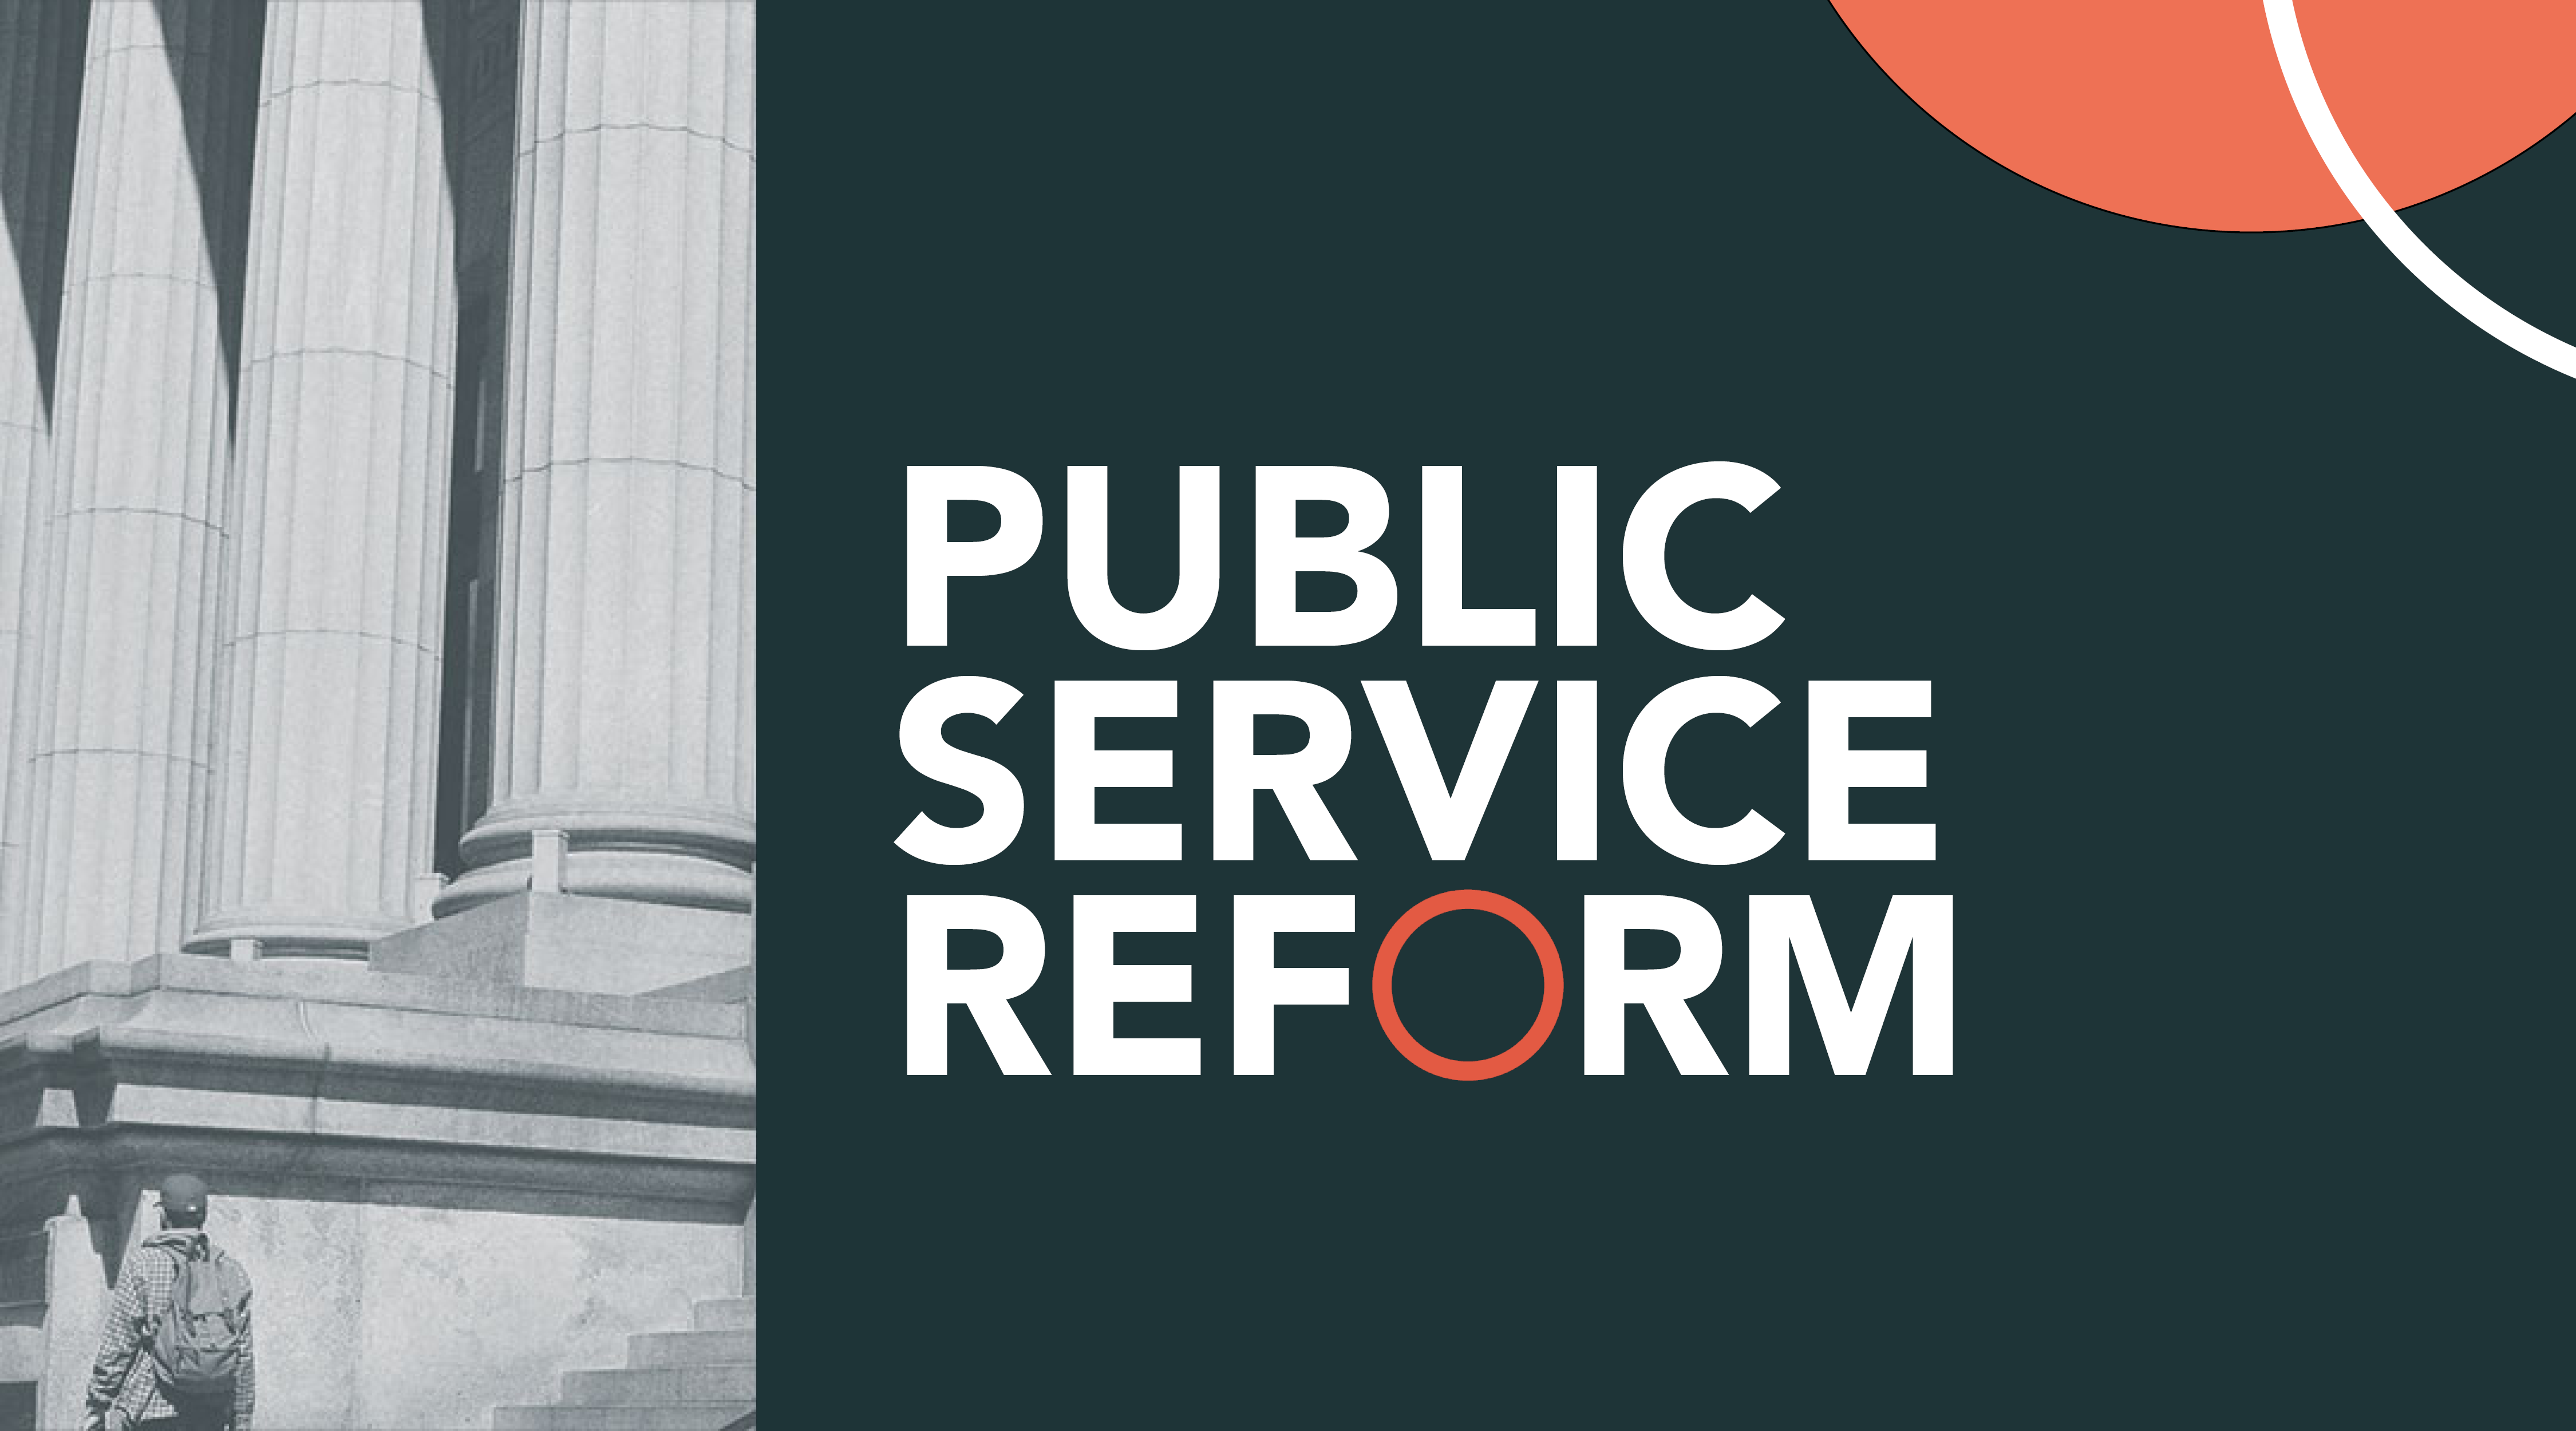 Public Service Reform, to liberate citizens and public servants and prevent problems